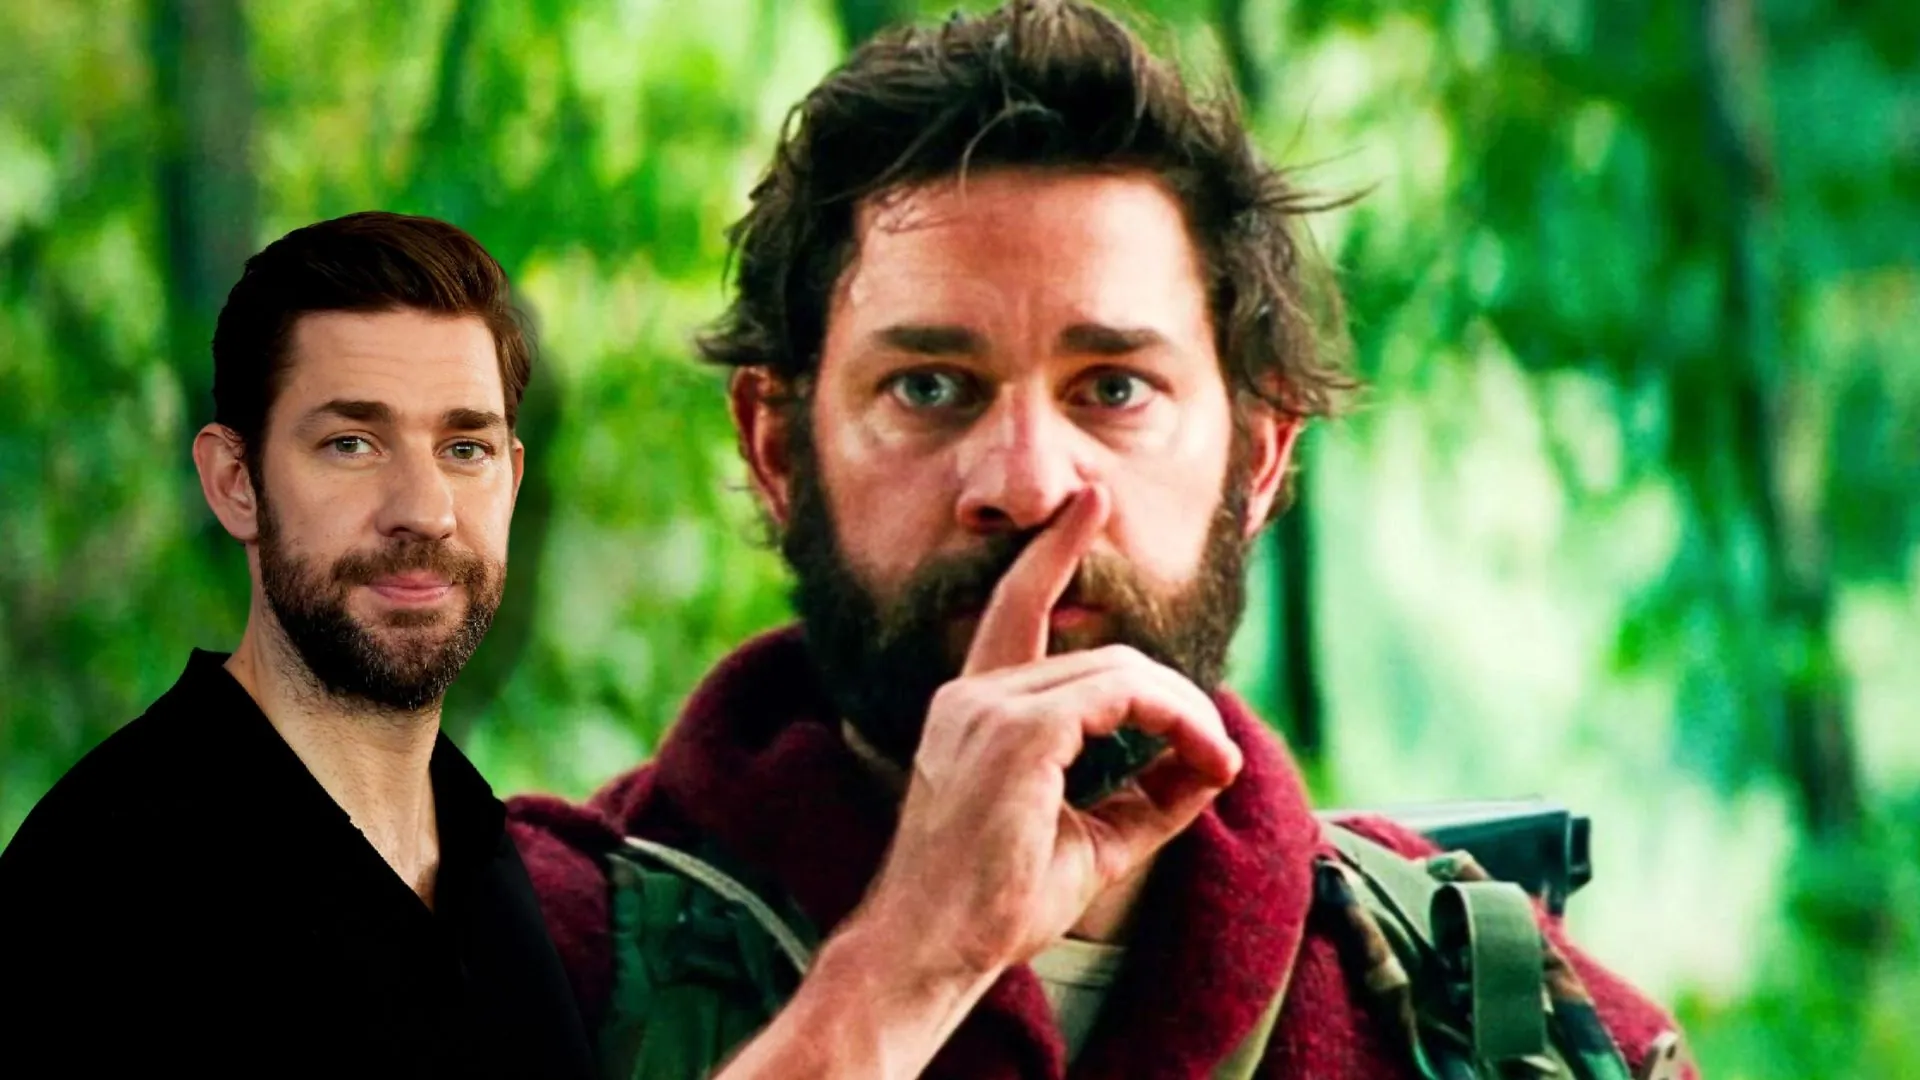 Ryan Reynolds and John Krasinski’s First Look For Upcoming Movie Imaginary Friends